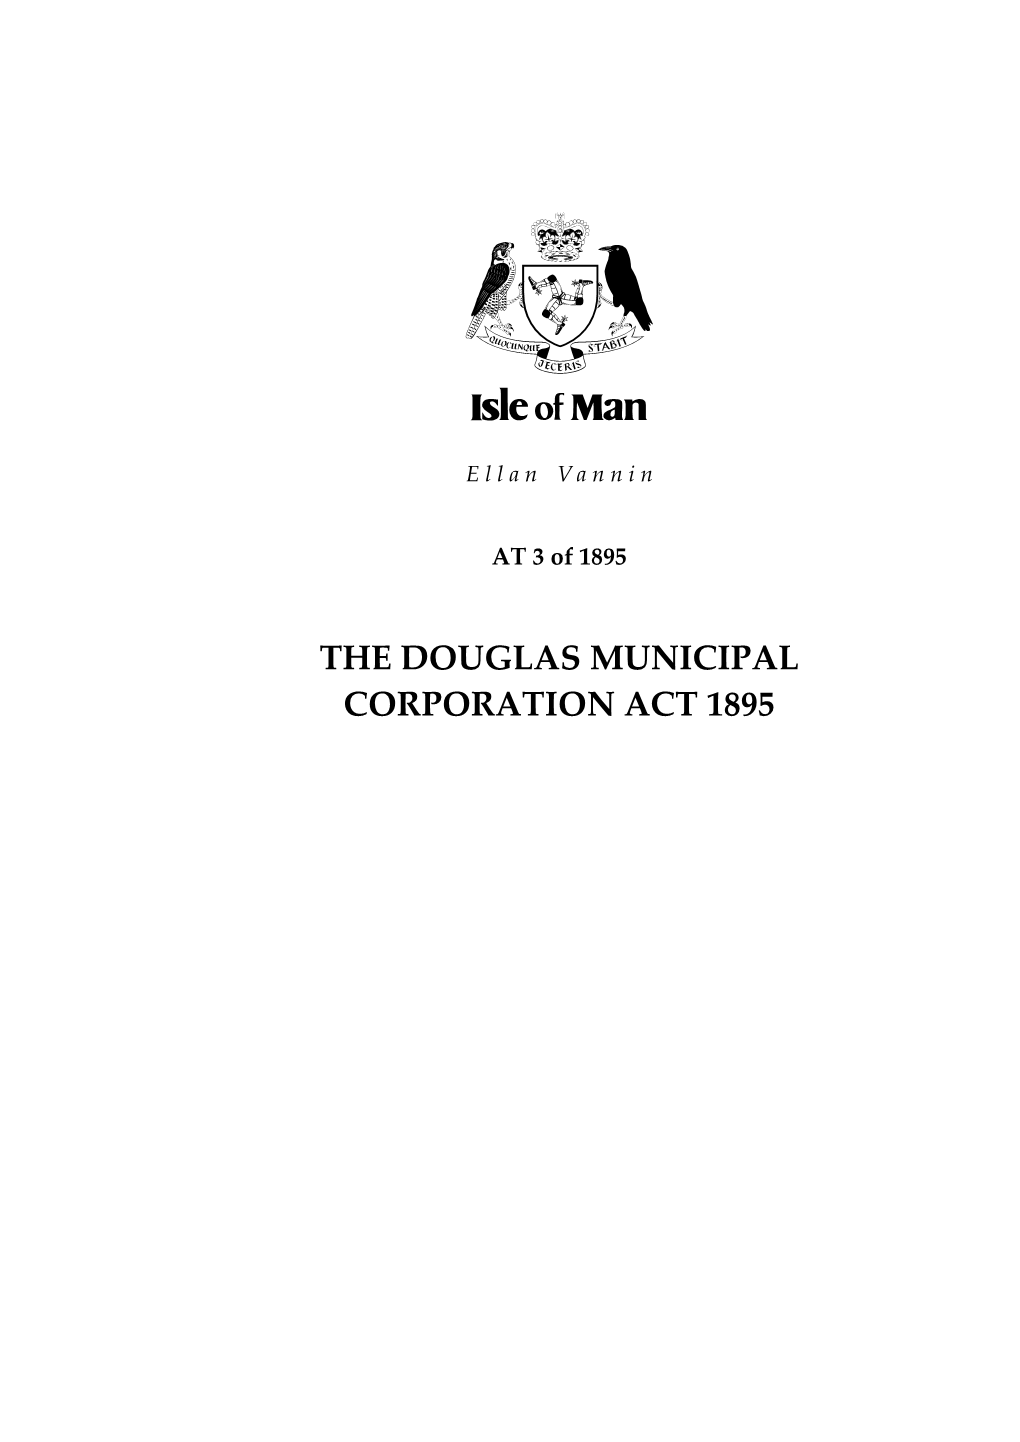 The Douglas Municipal Corporation Act 1895